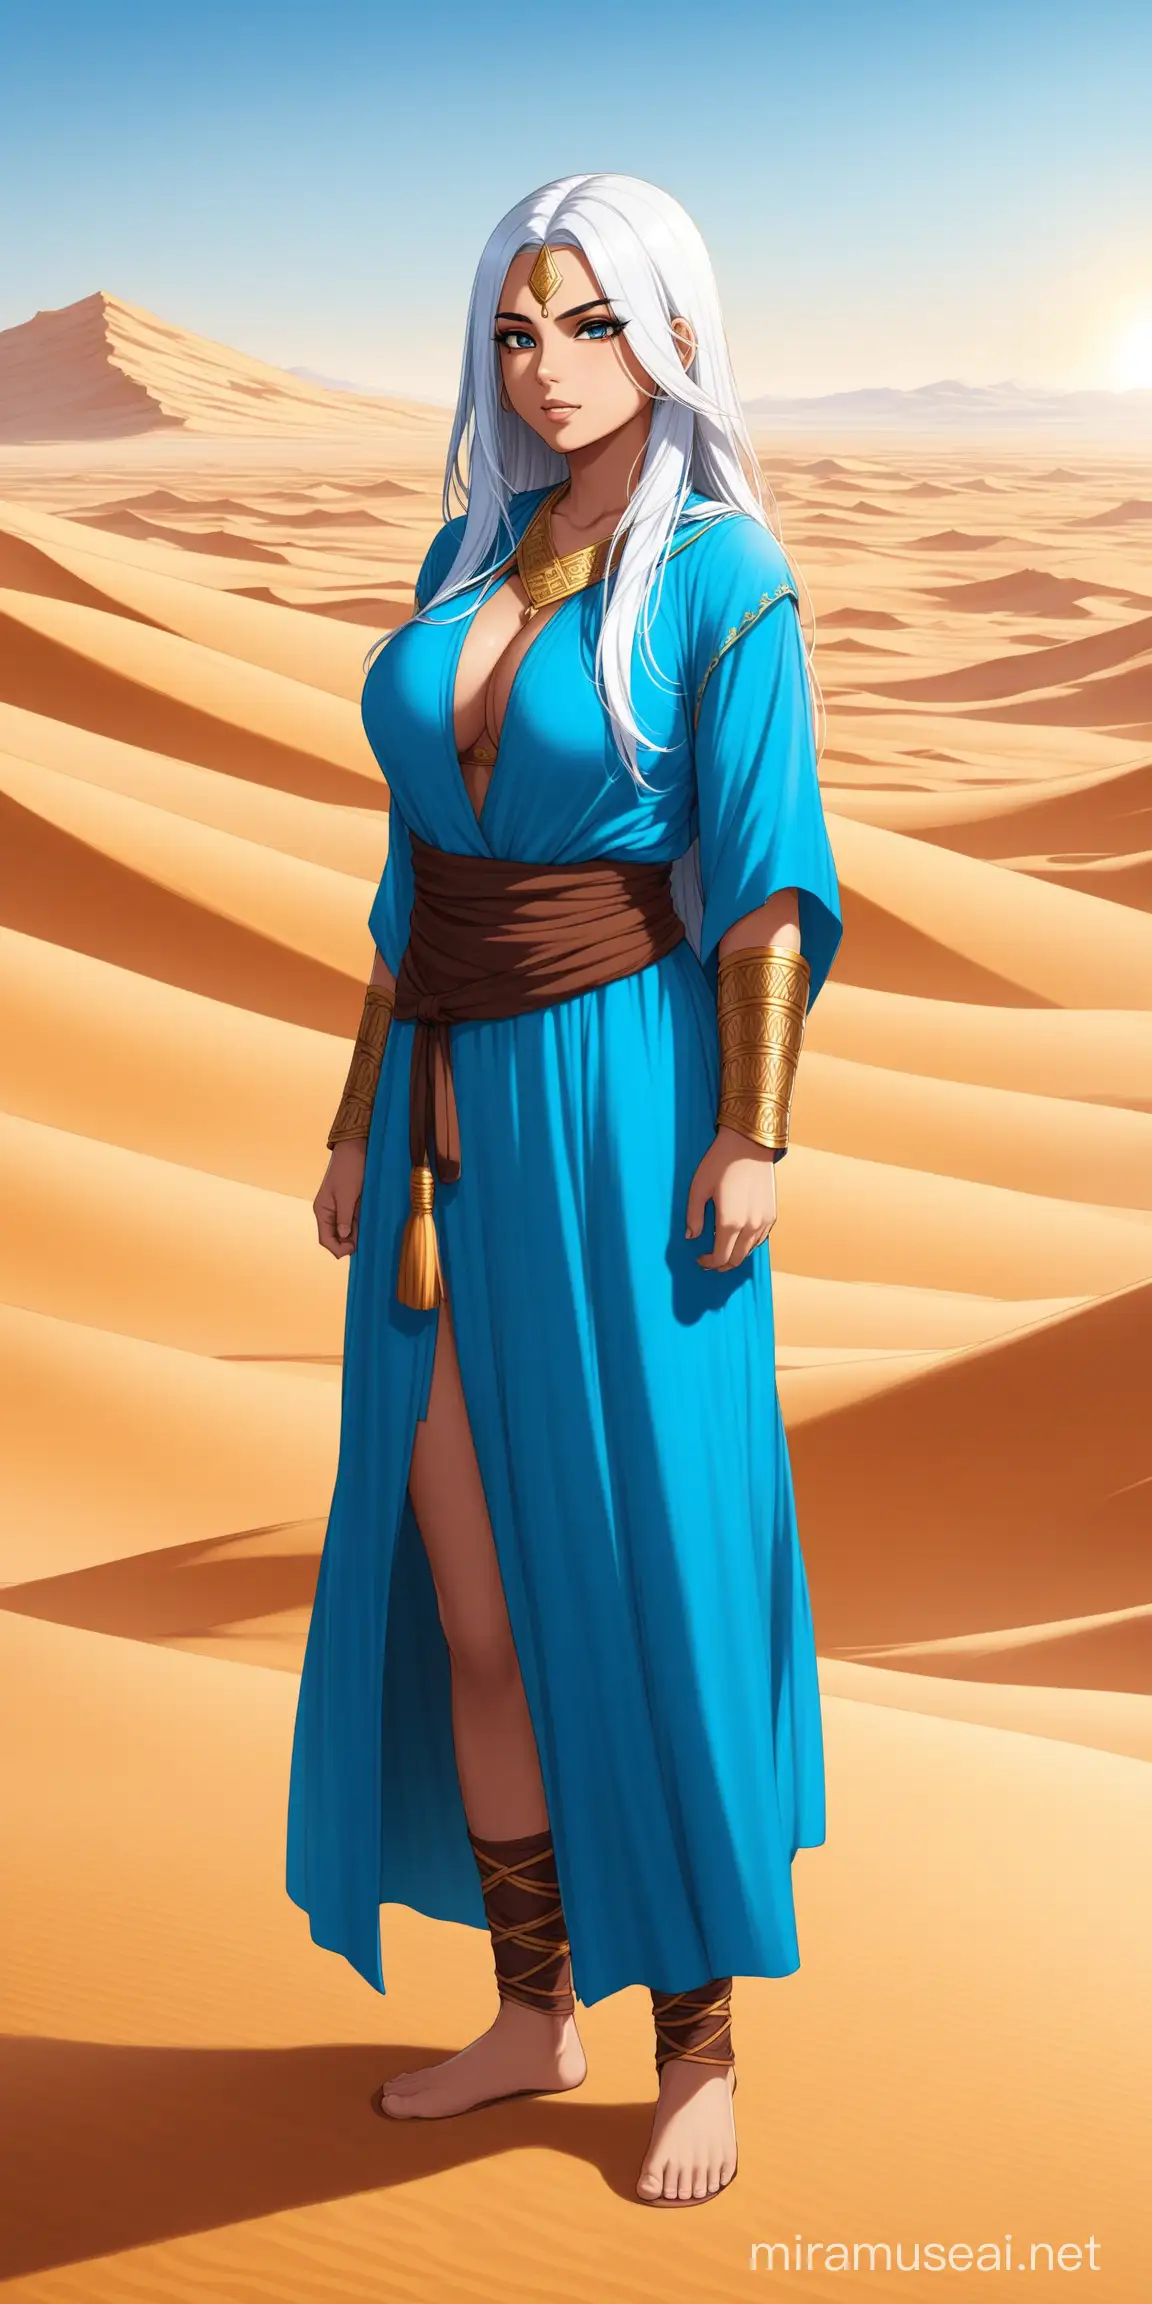 Arab Female Warrior Monk Stands in Blue Robes Amid Desert Landscape